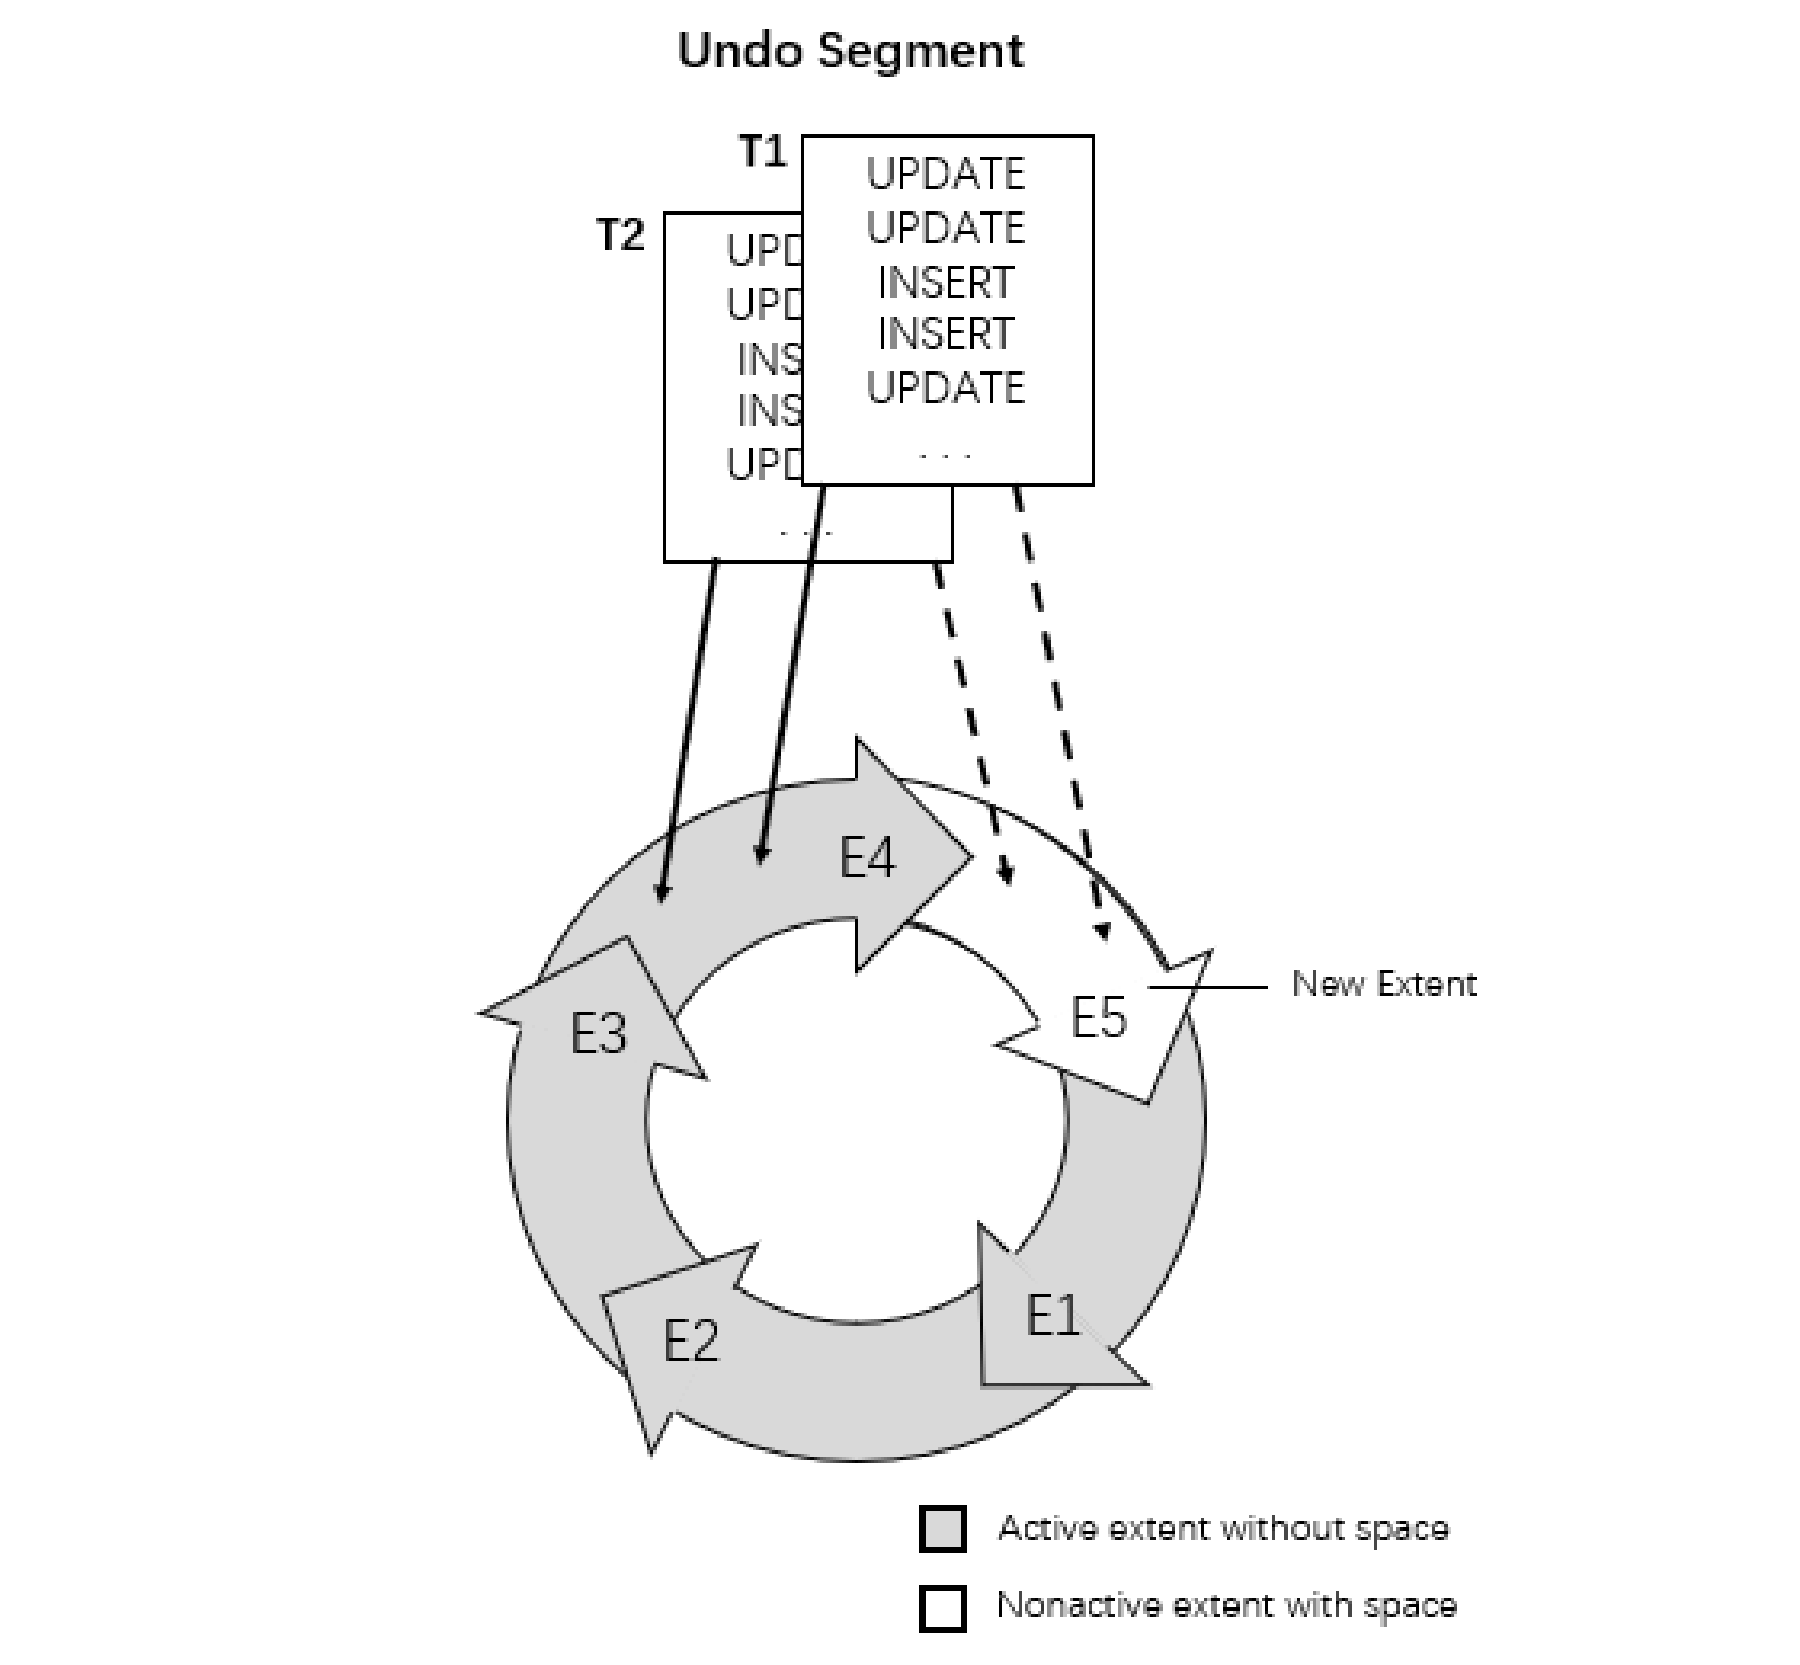 Figure 3 Allocation of a New Extent for an Undo Segment